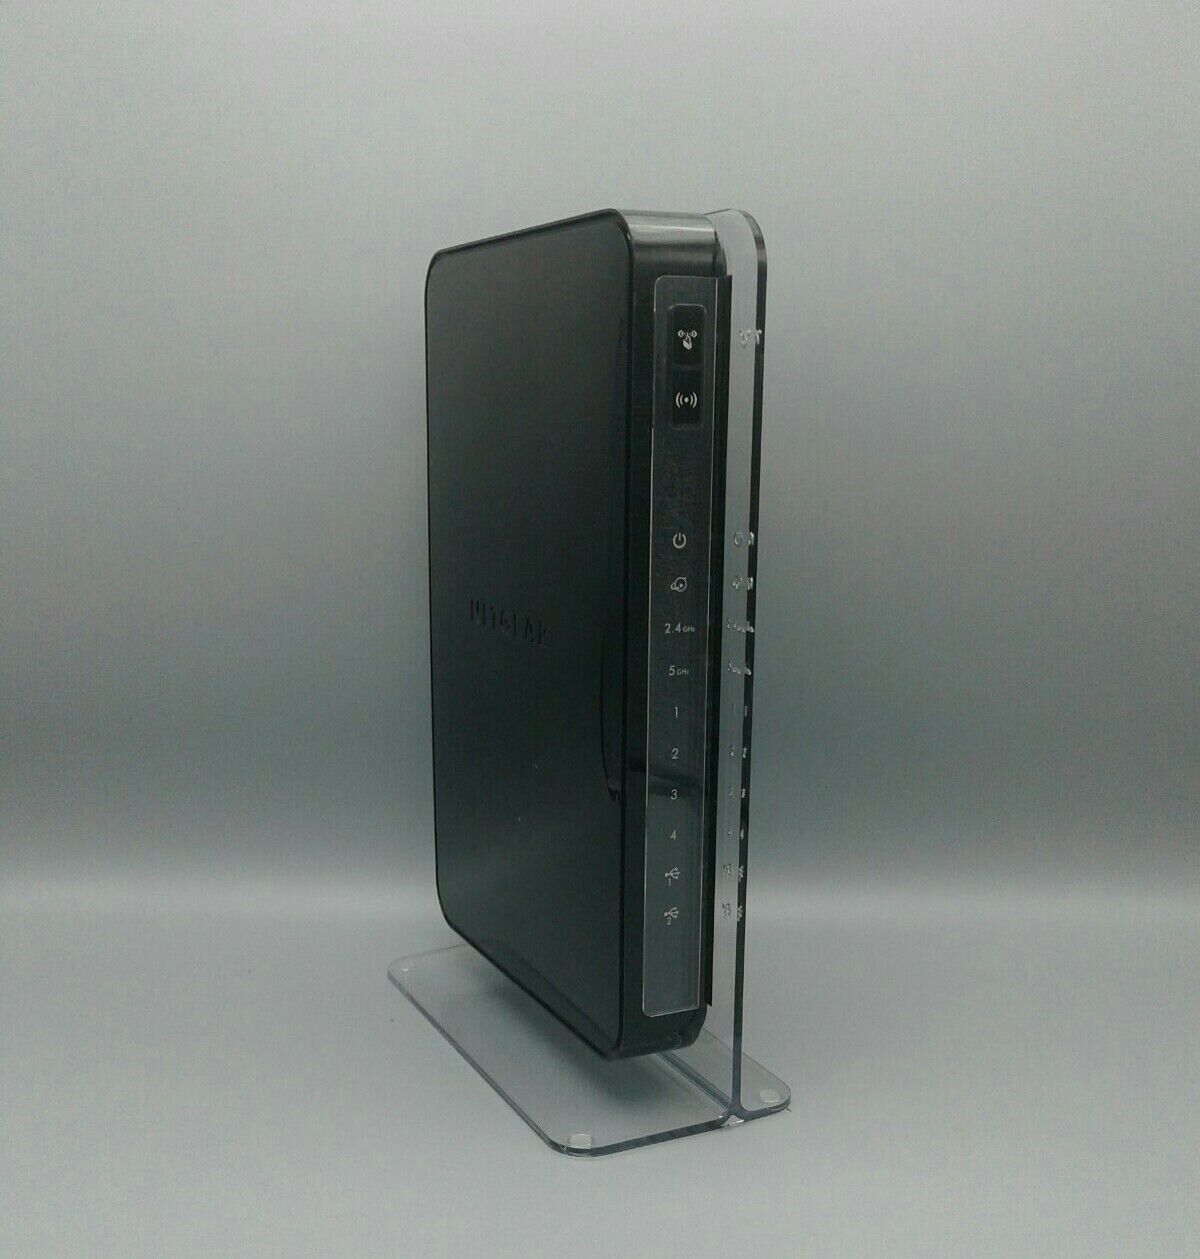 Netgear N900 Wireless Dual Band Gigabit Router WNDR4500v2 